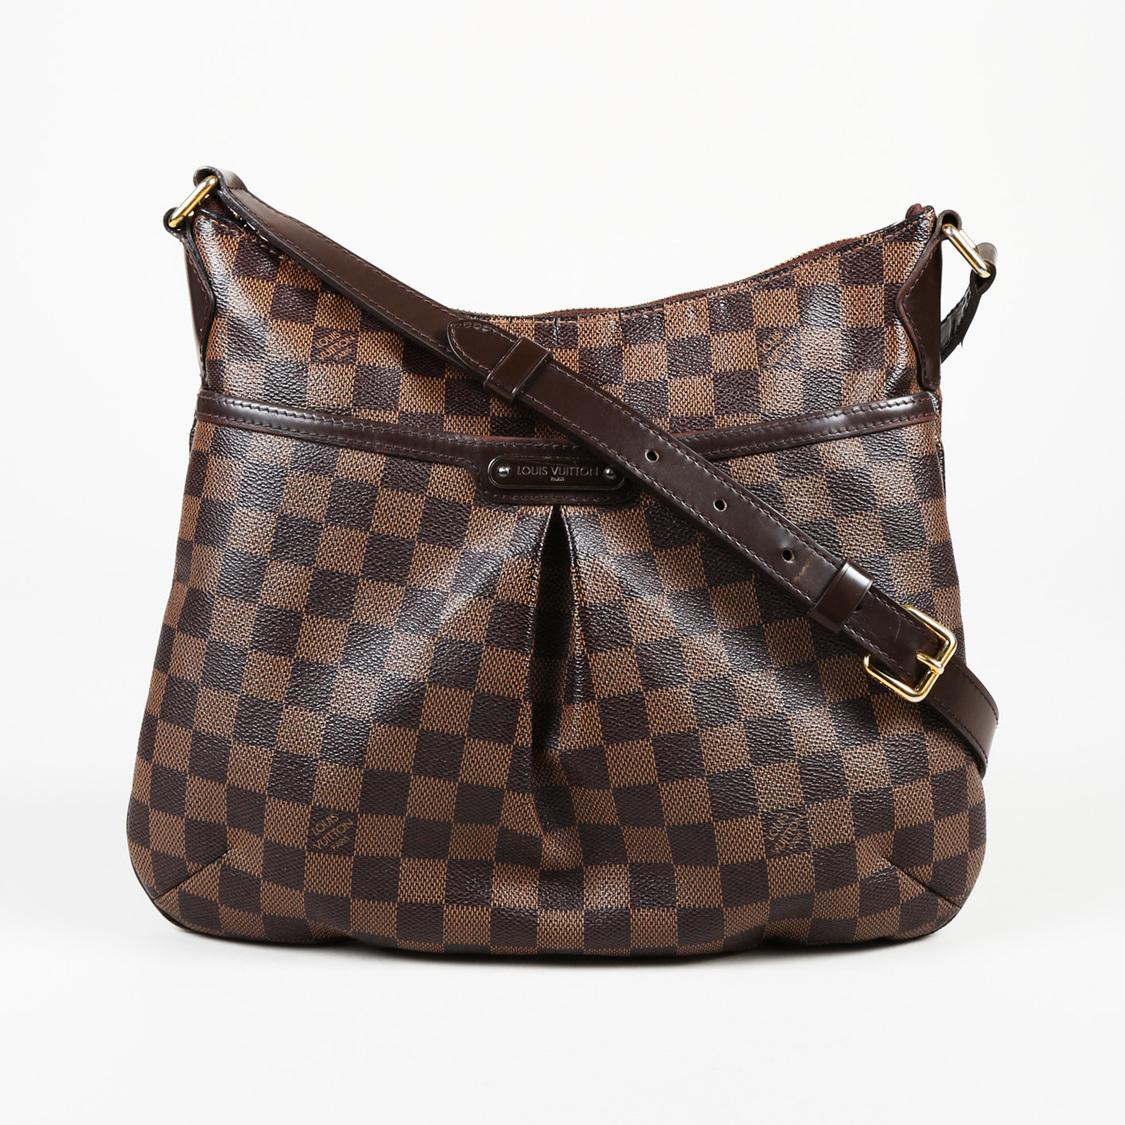 Louis Vuitton Bloomsbury Pm Damier Ebene Crossbody Bag in Brown - Lyst